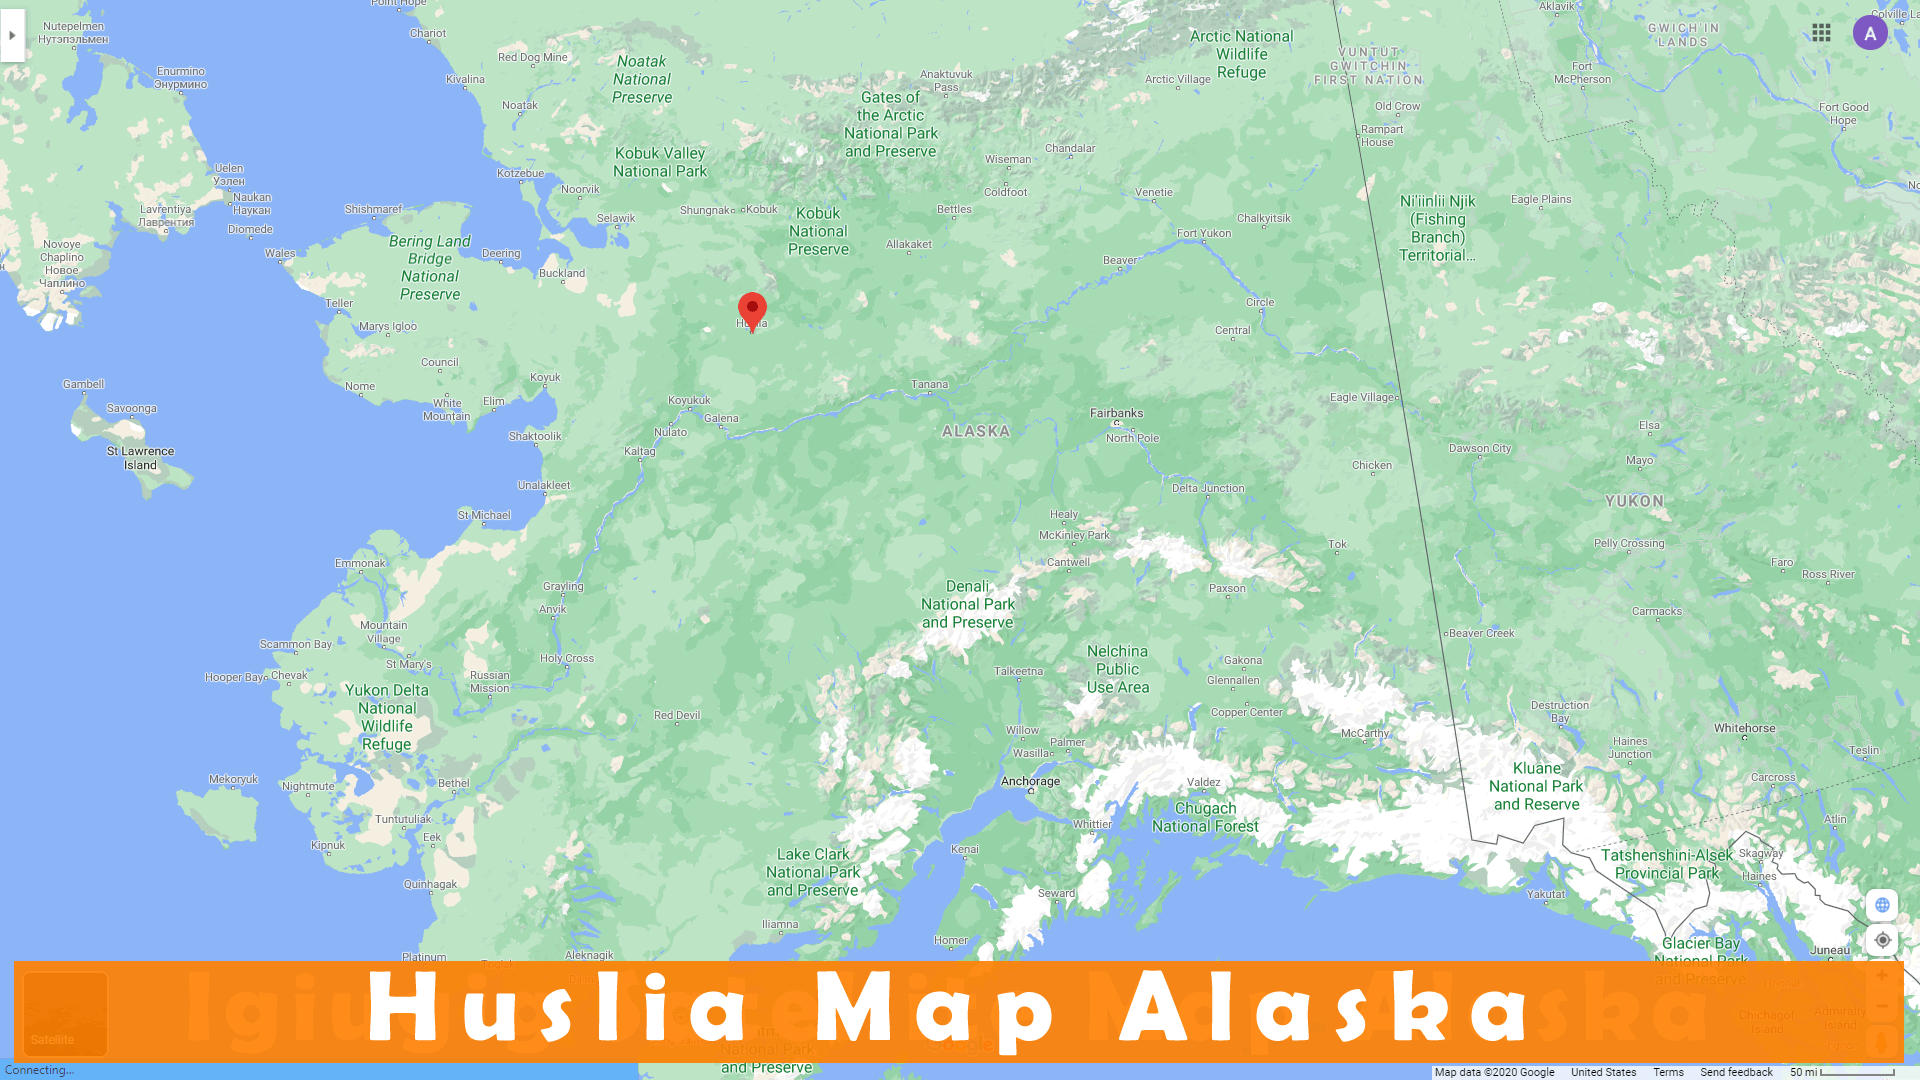 Huslia map